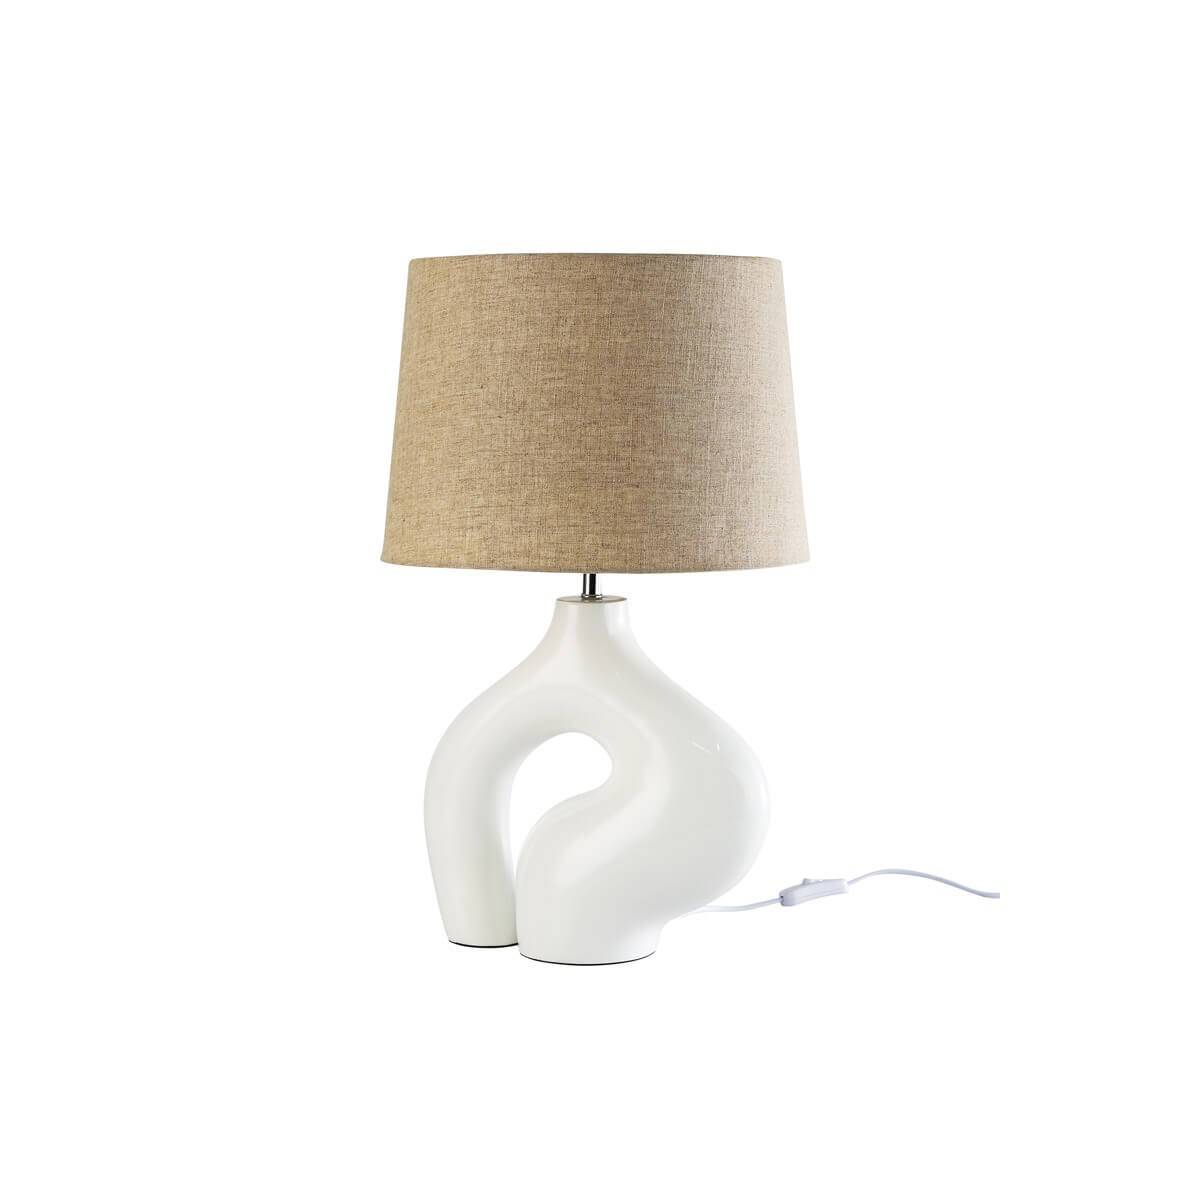 Modern table lamp "Capta" - E27